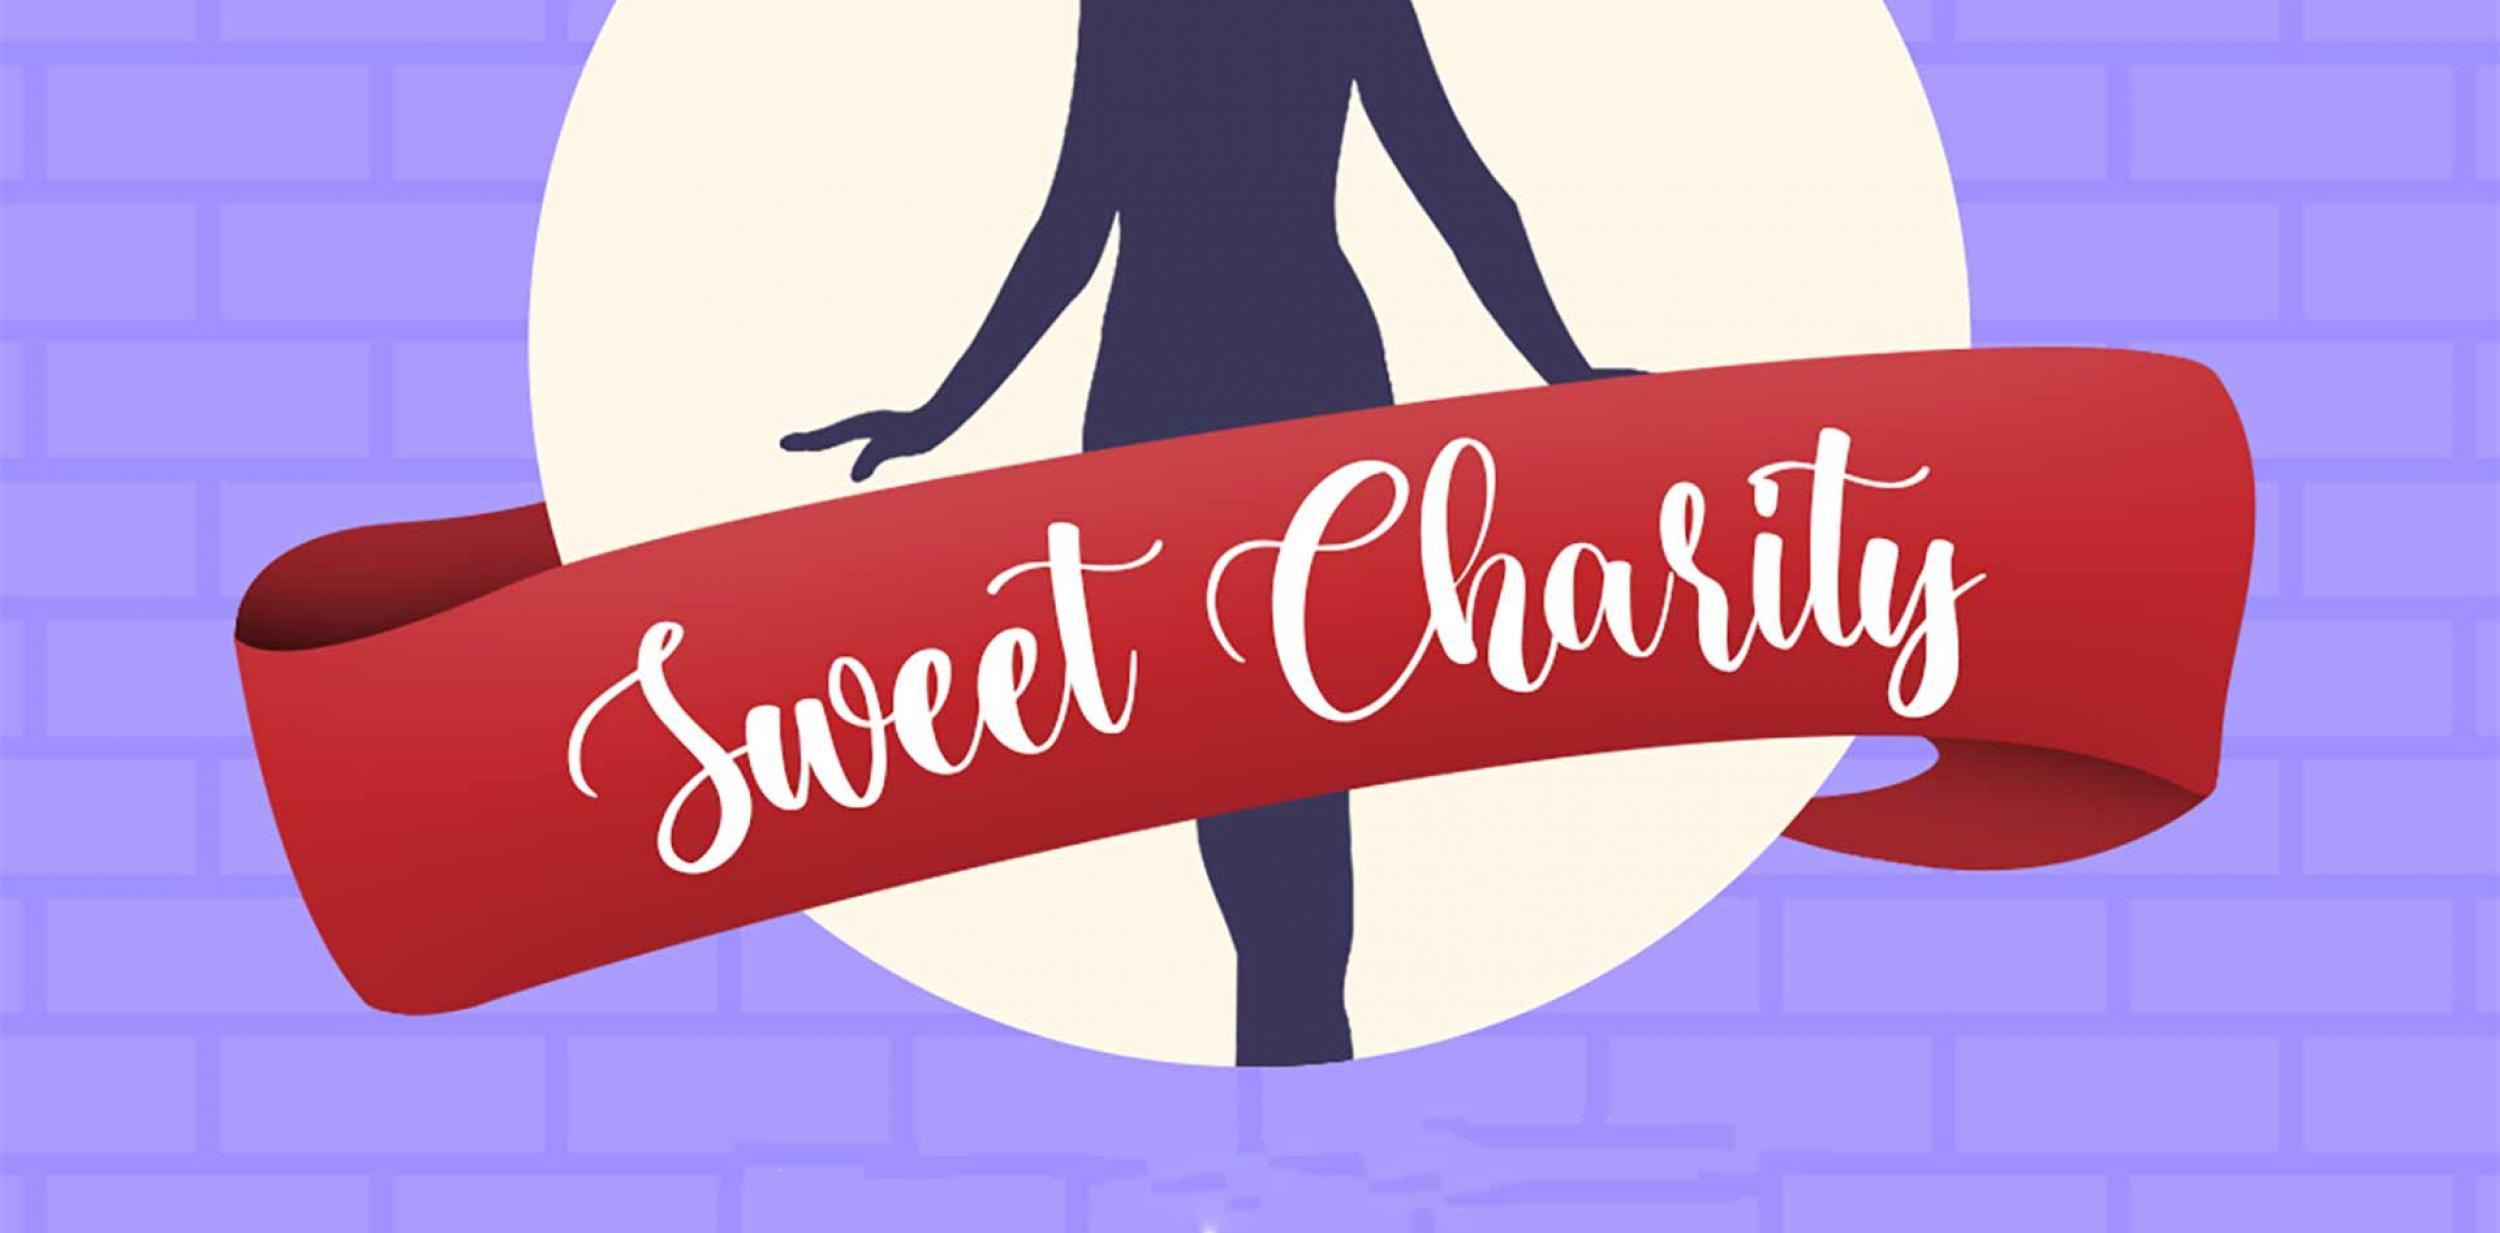 Sweet charity logo against a female silhouette